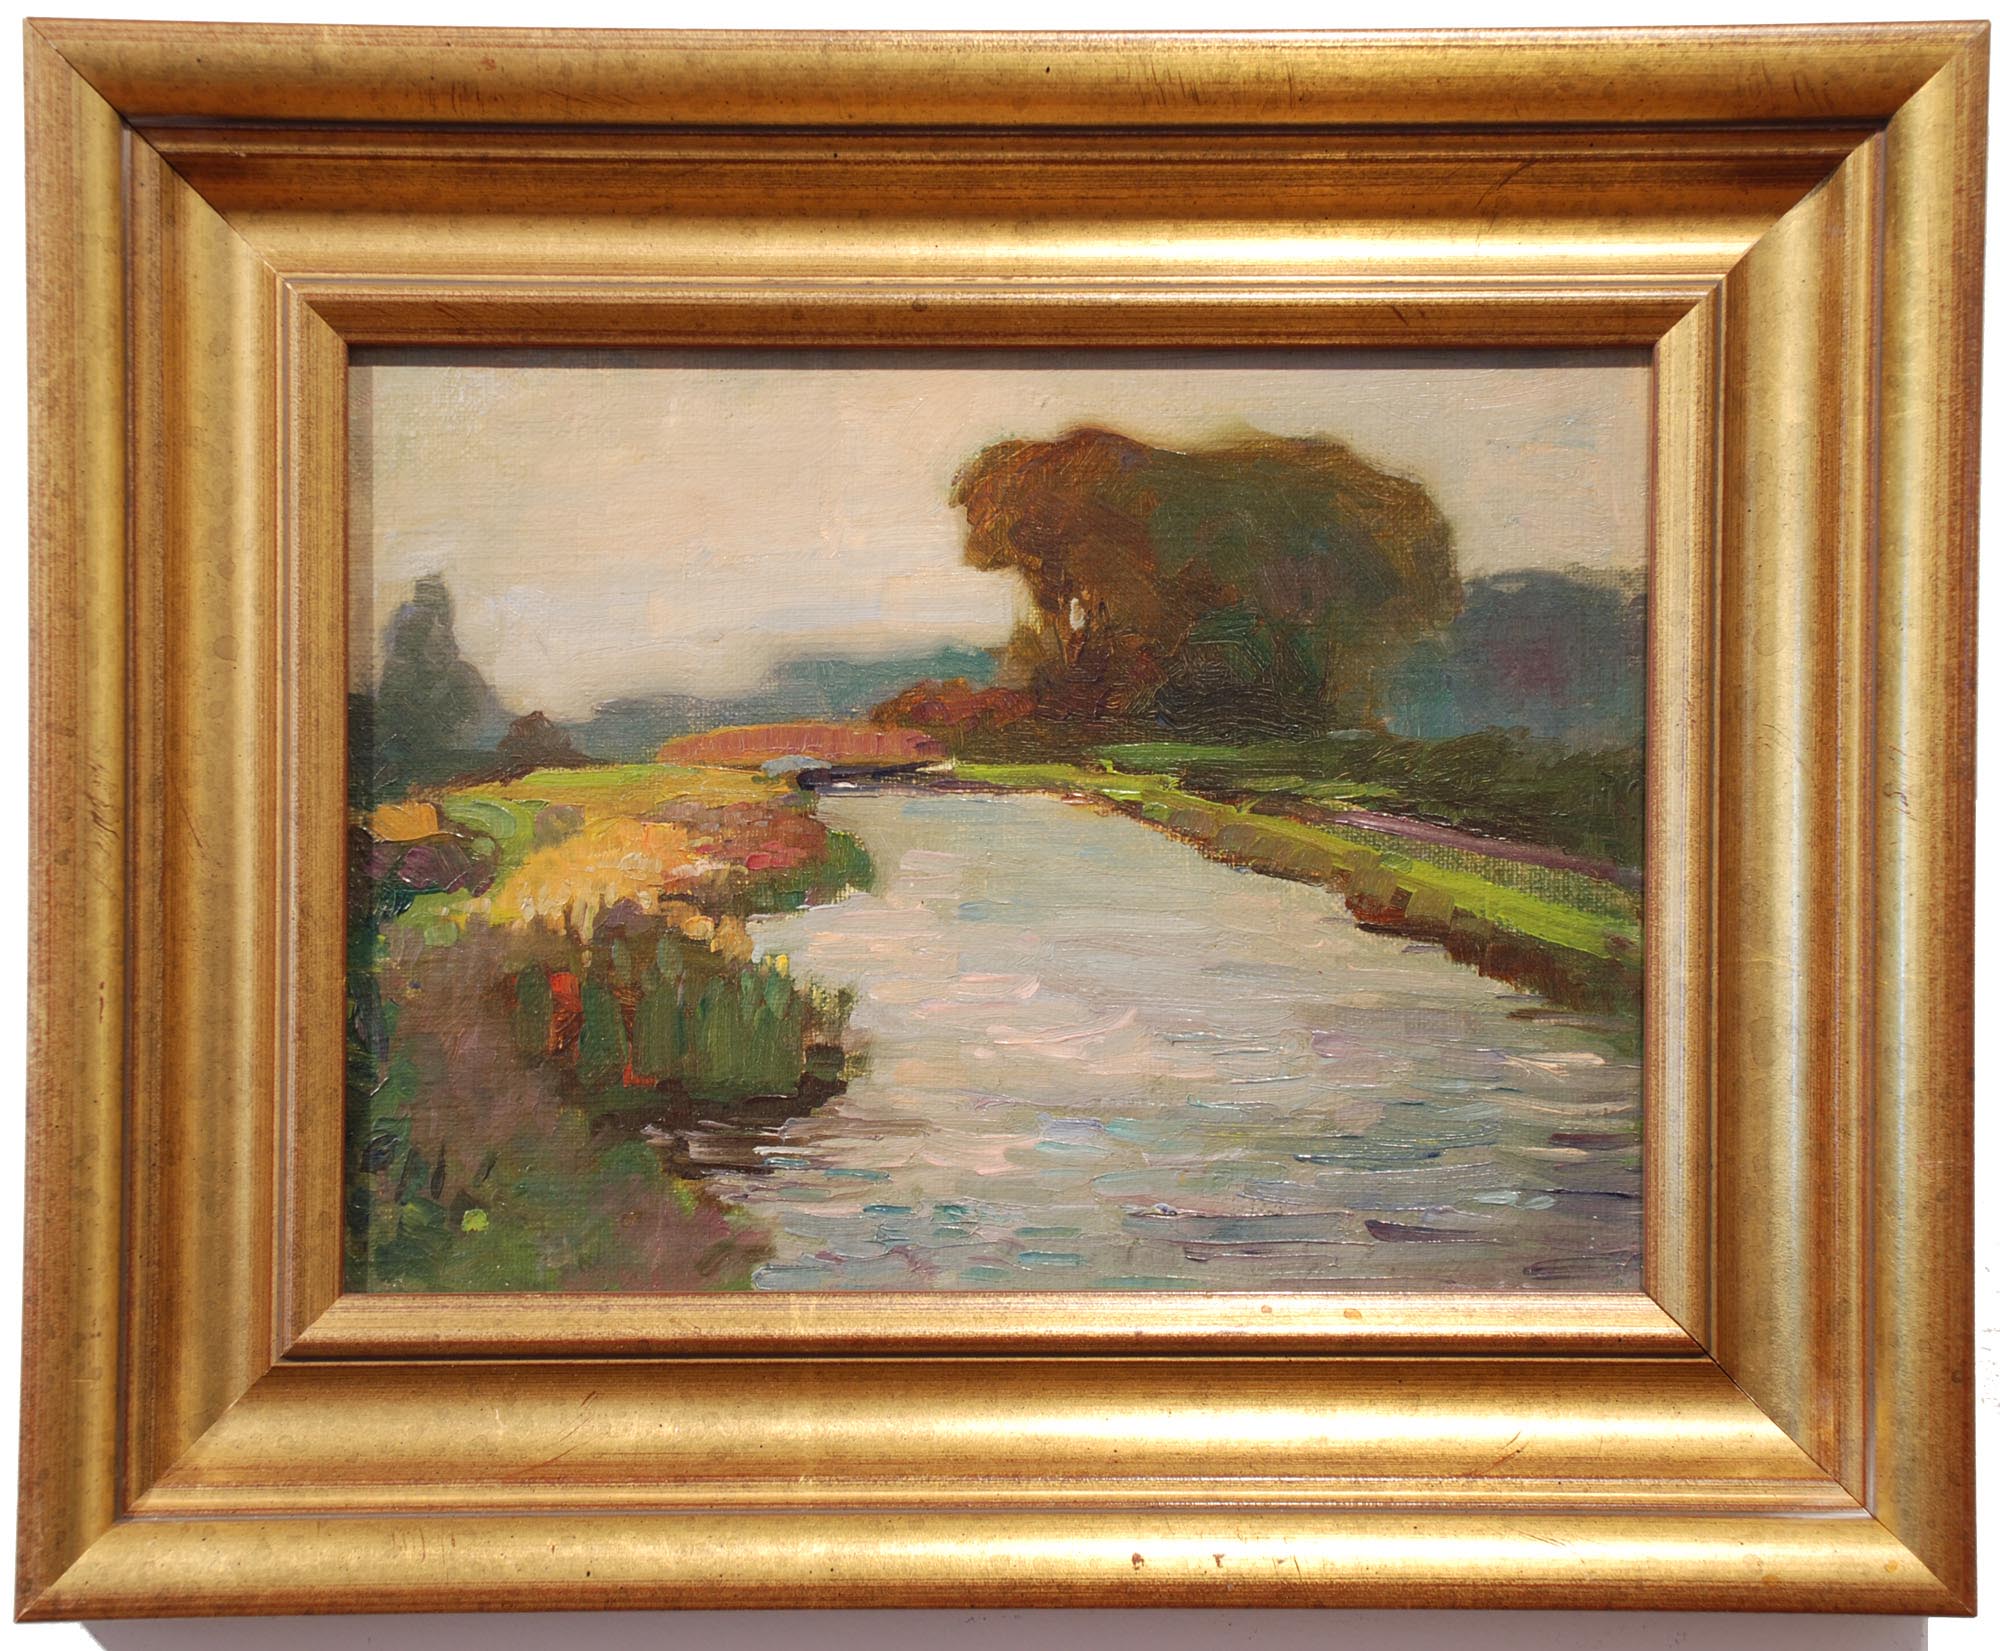 William Dennis Path Along the River framed